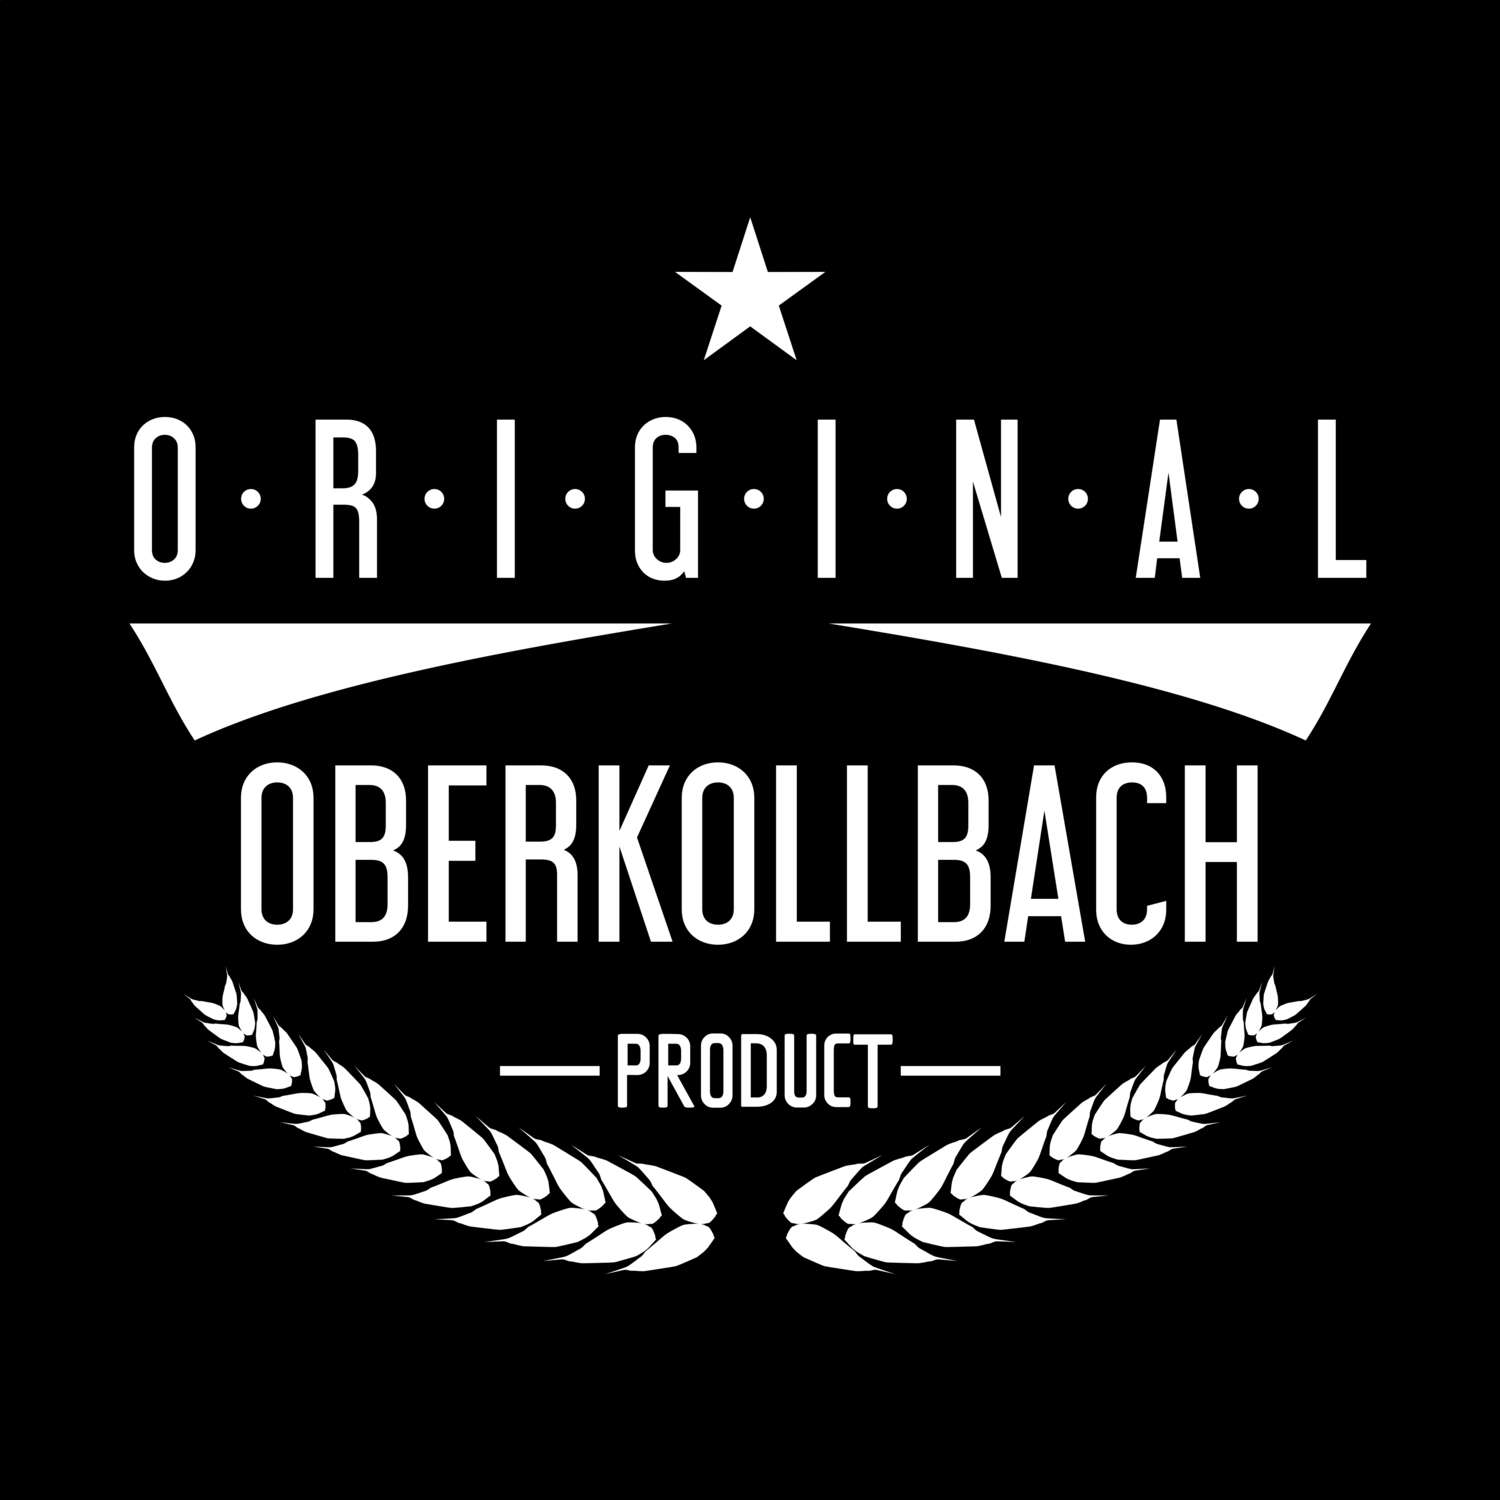 Oberkollbach T-Shirt »Original Product«